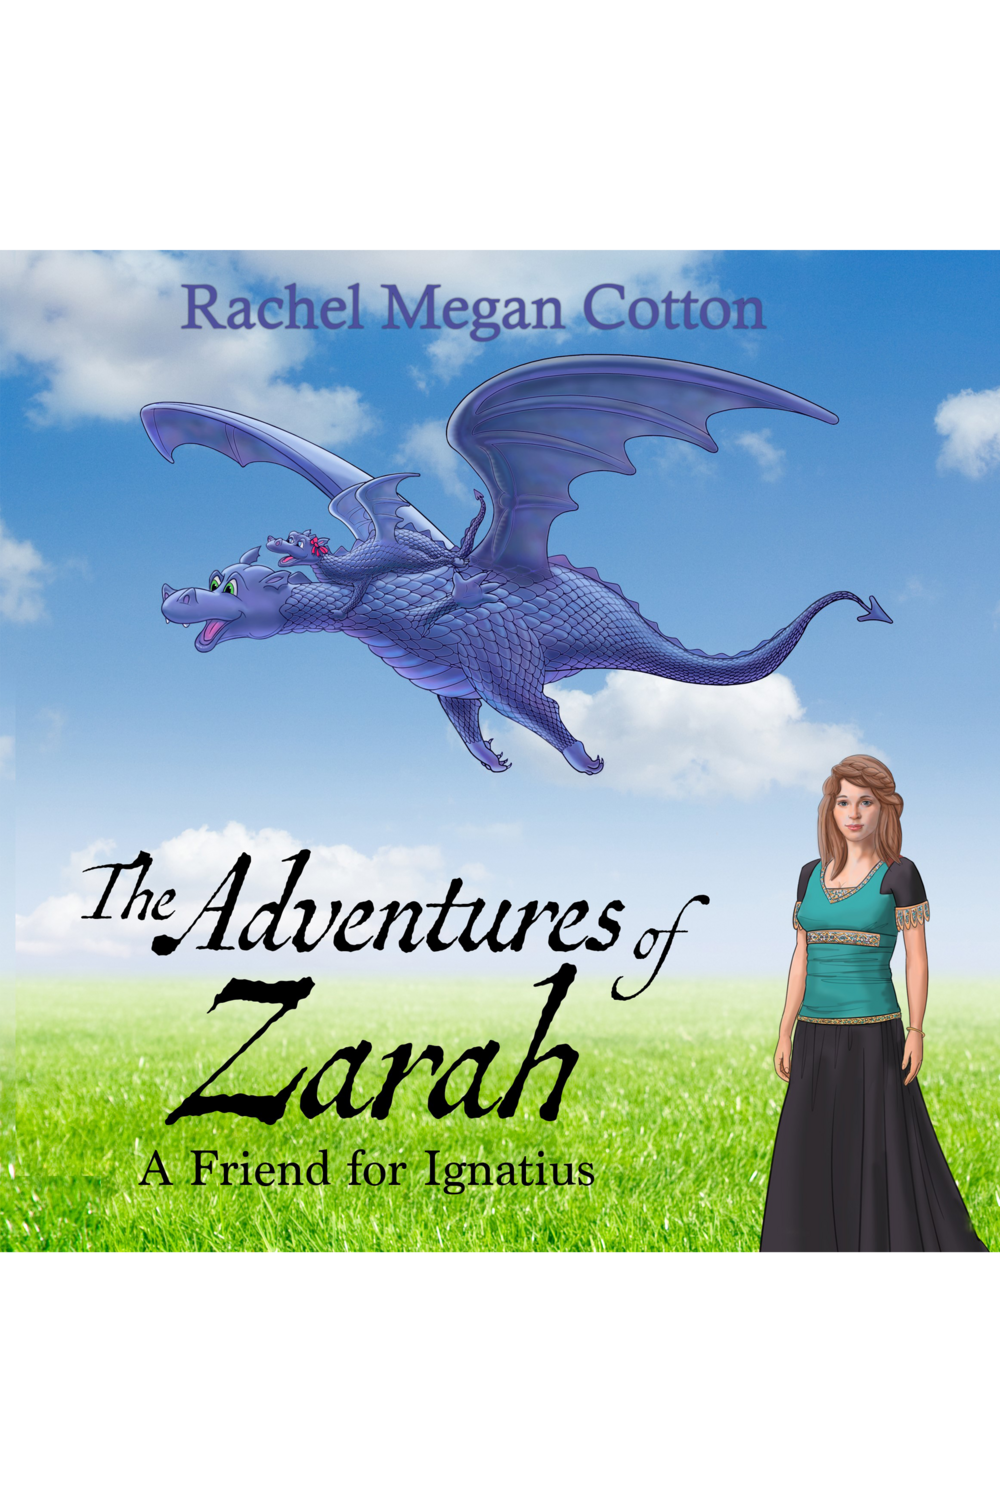 The Adventures of Zarah: A Friend for Ignatius by Rachel Megan Cotton